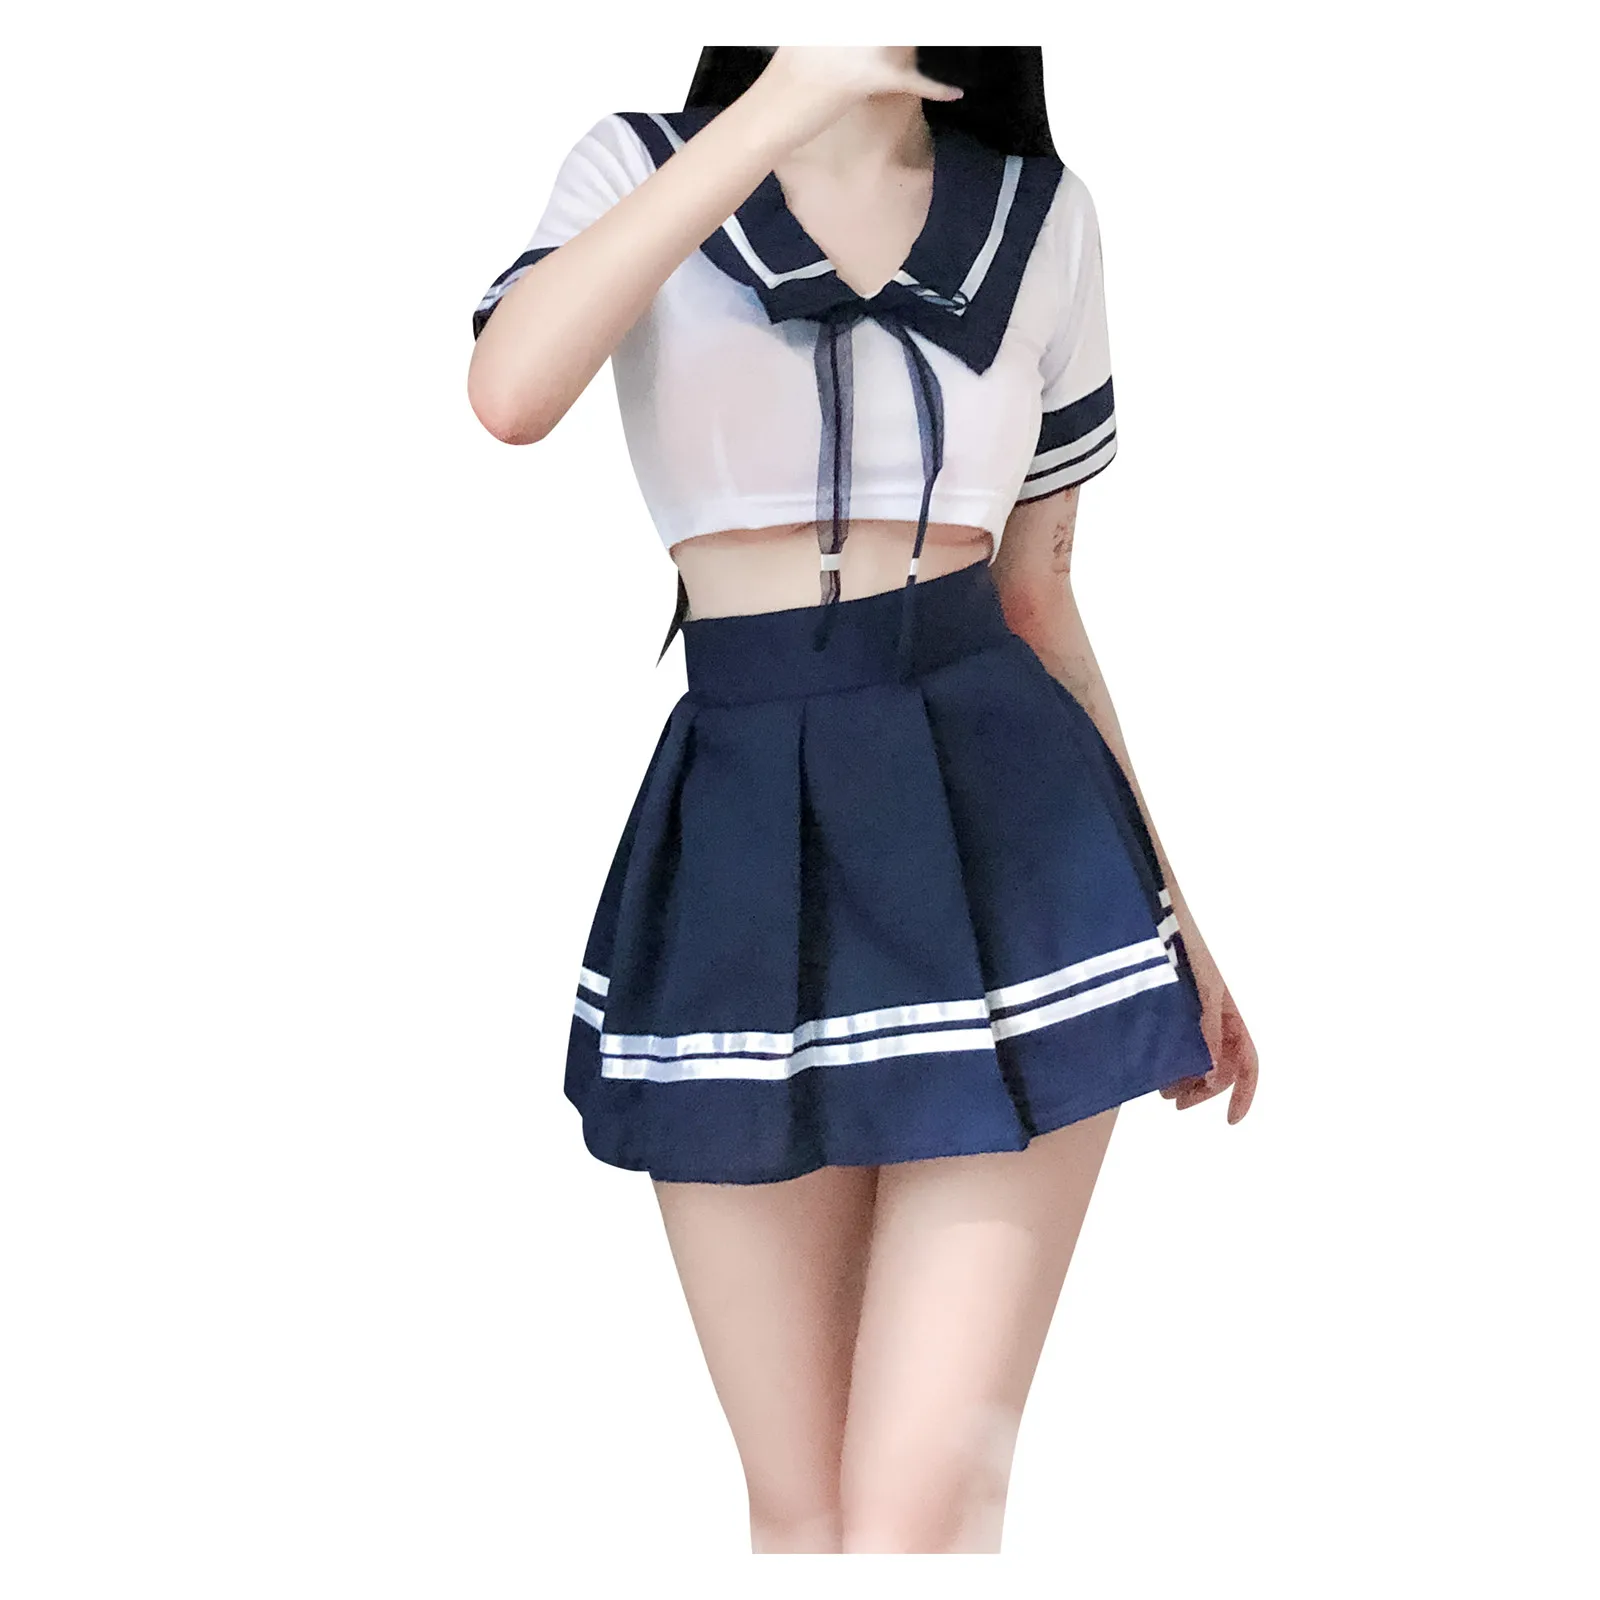 Hentai Schoolgirl Skirt Porn - Women Sexy Uniform School Girl New Ladies Dress Women Lace Miniskirt Outfit  Skirt Mujer Sensual Femininas Pajamas Set White Blue - Cosplay Costumes -  AliExpress